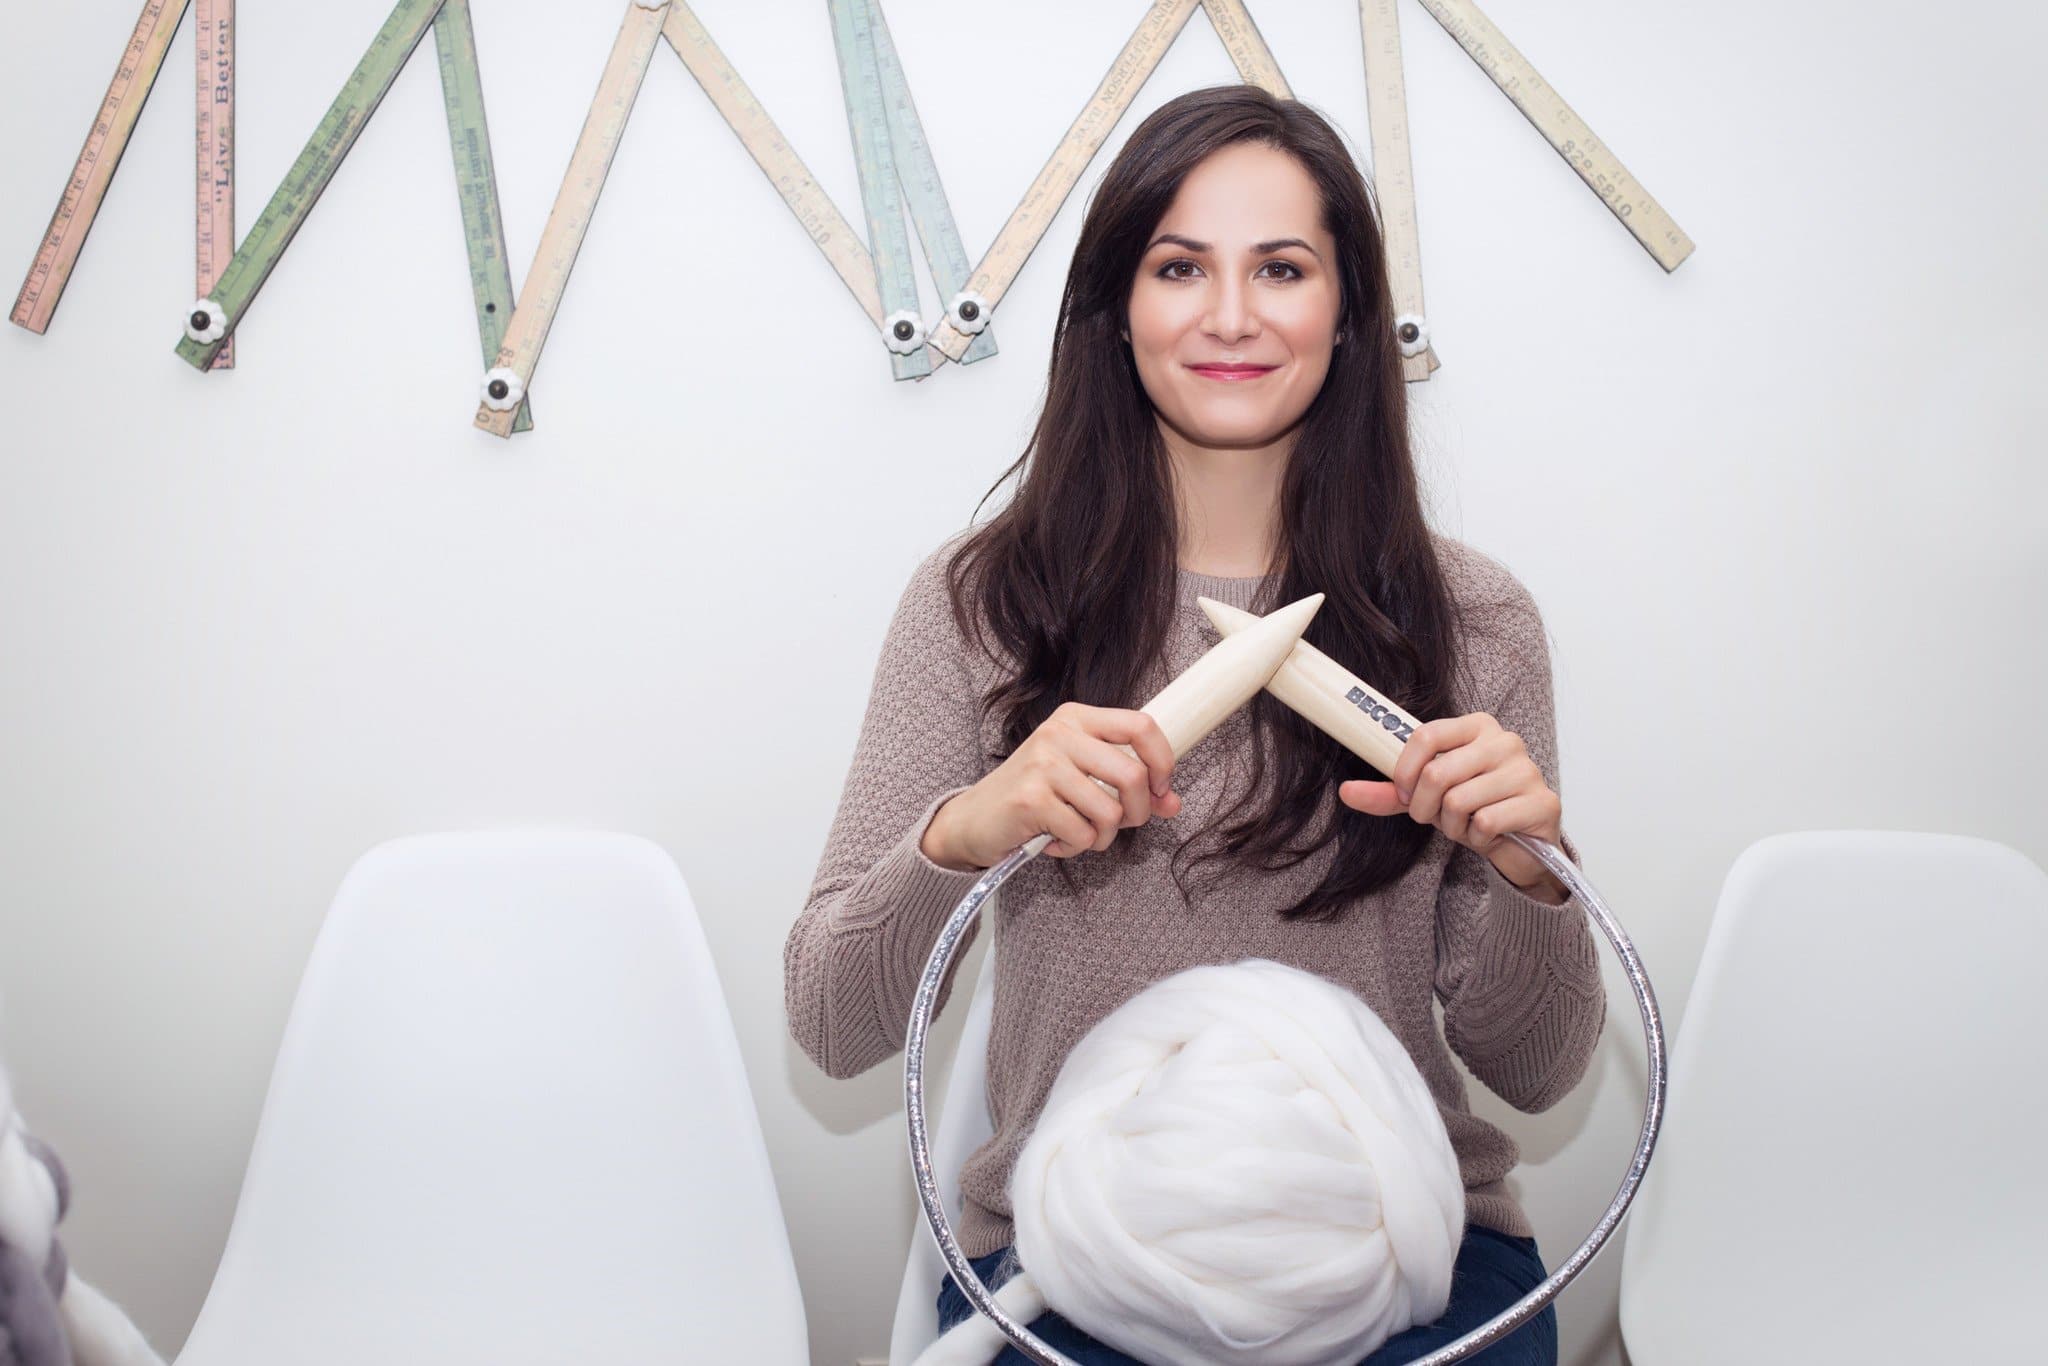 Giant Circular Wooden Needles for Super Chunky Knitting. – BeCozi